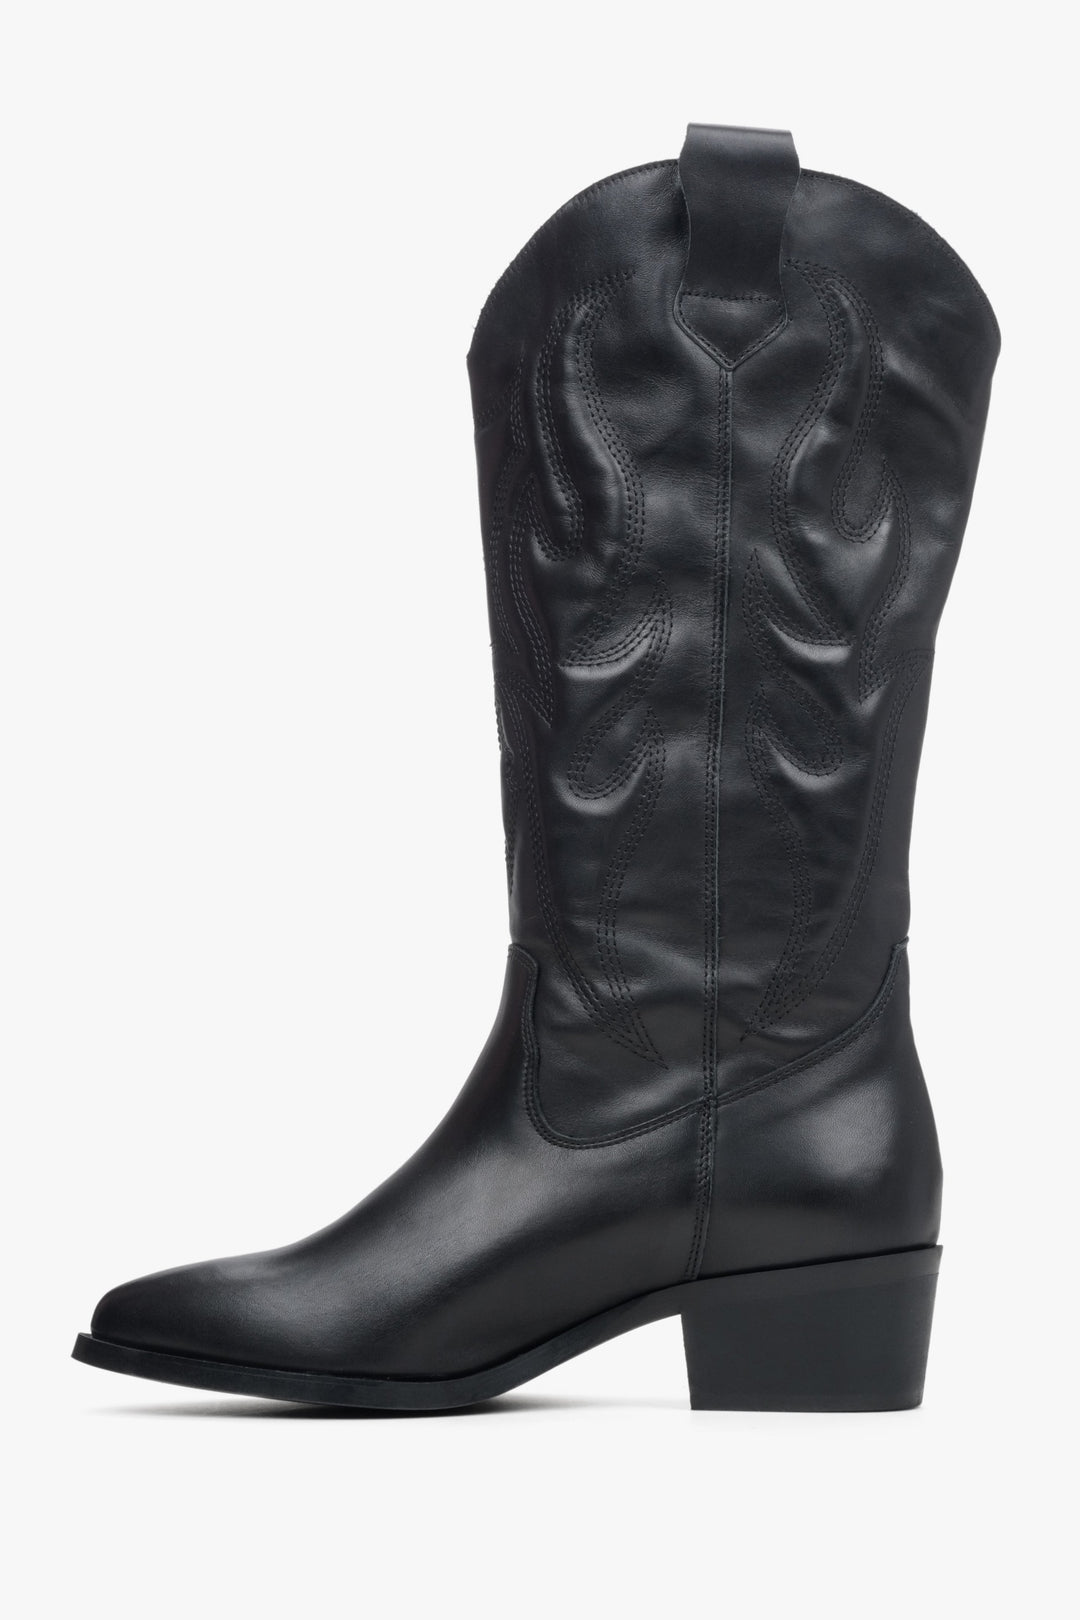 Estro women's black cowboy boots in genuine leather - boot profile.